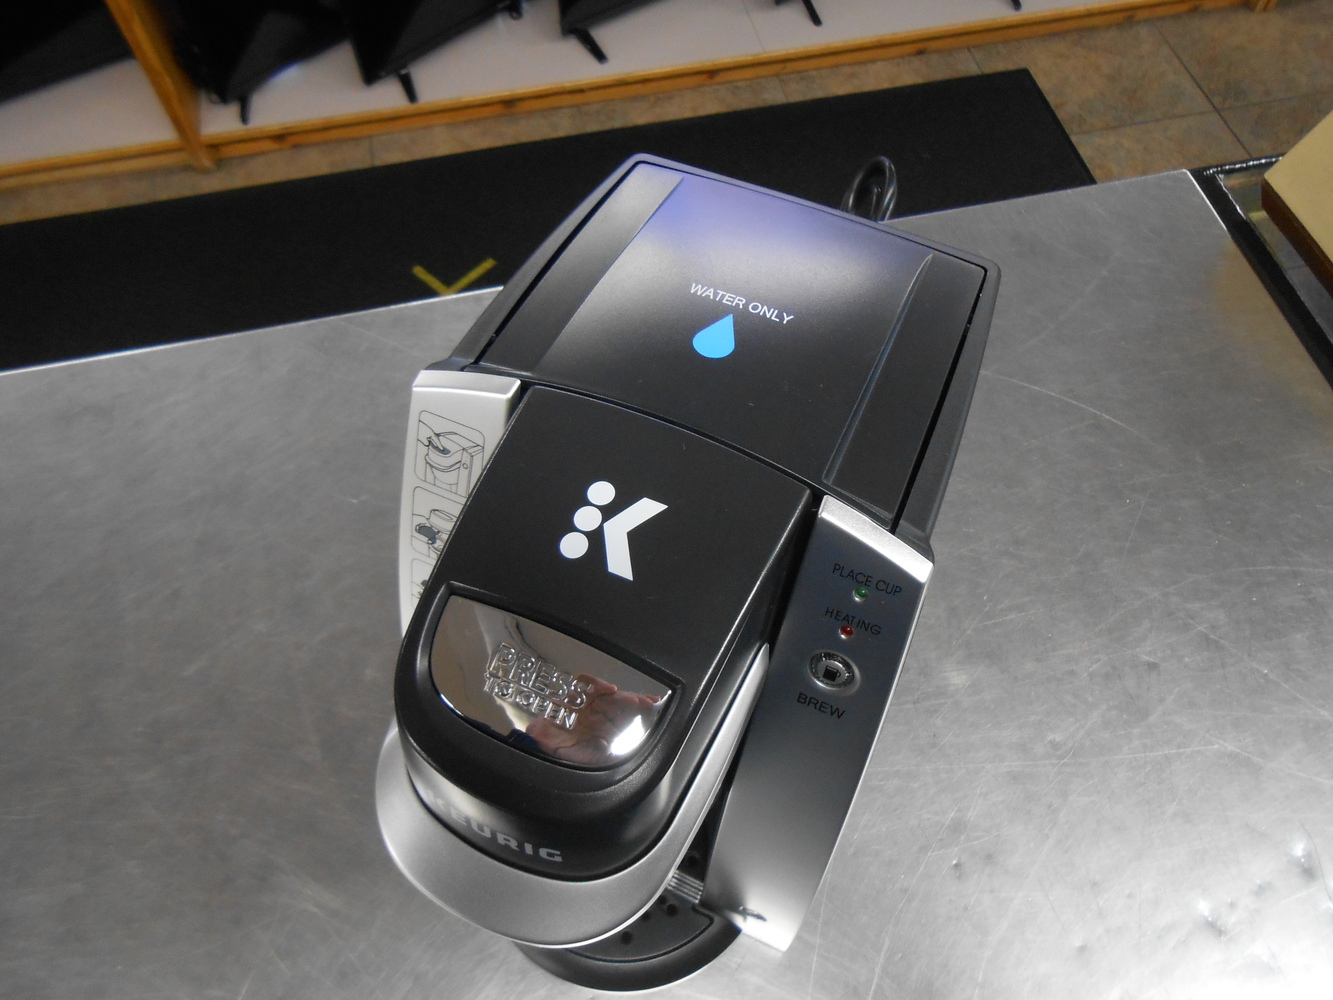 Keurig K130 Single Cup Brewing System - Never Used!!